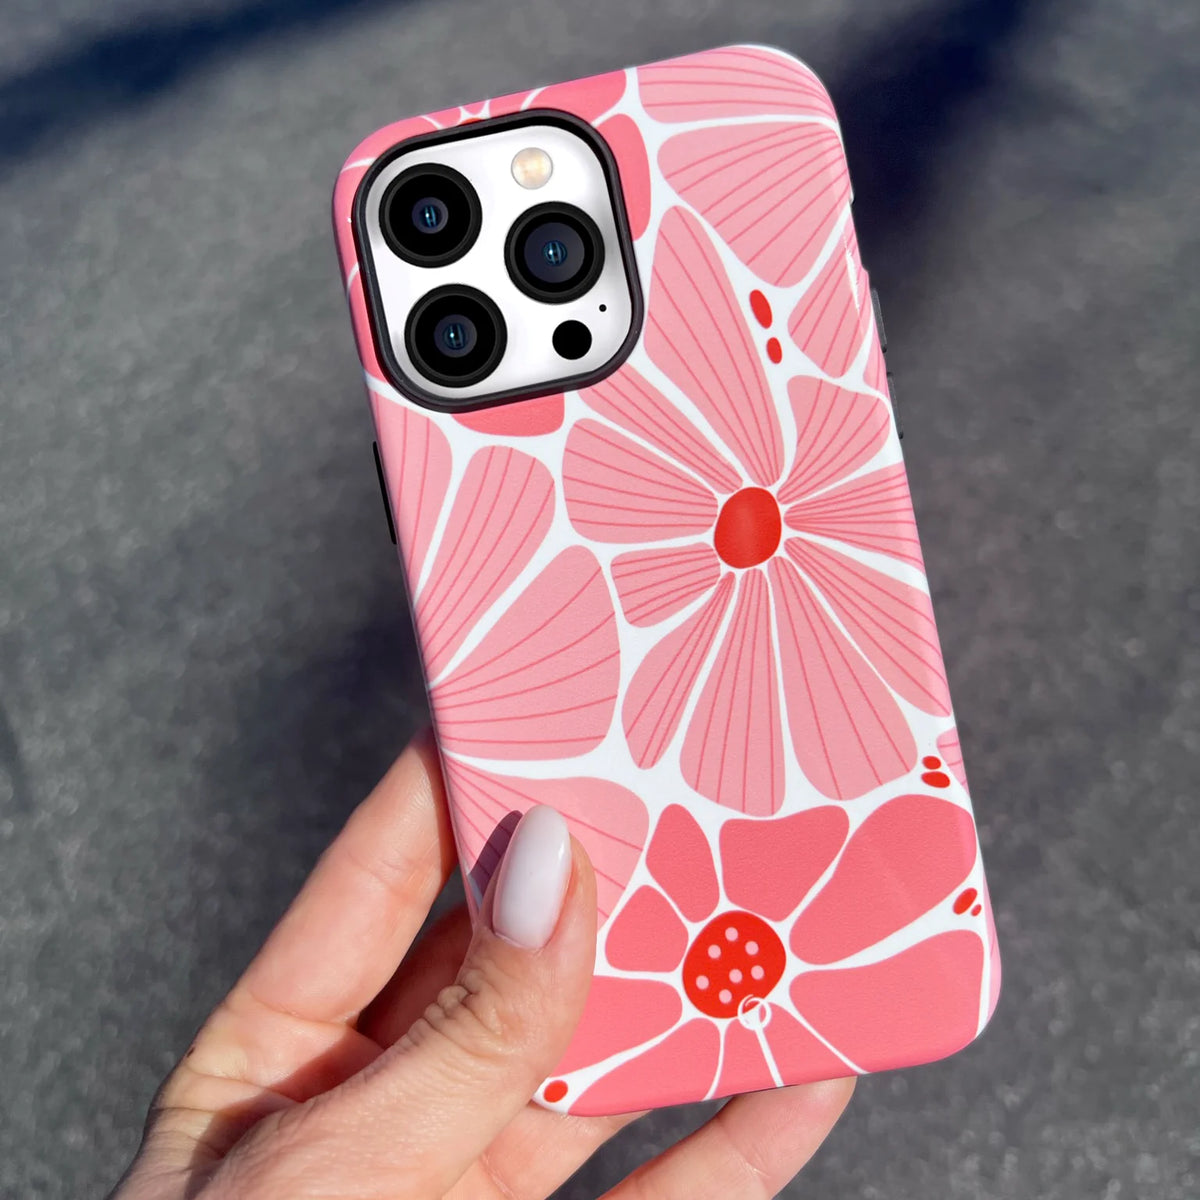 Floral Blast iPhone Case - iPhone 11